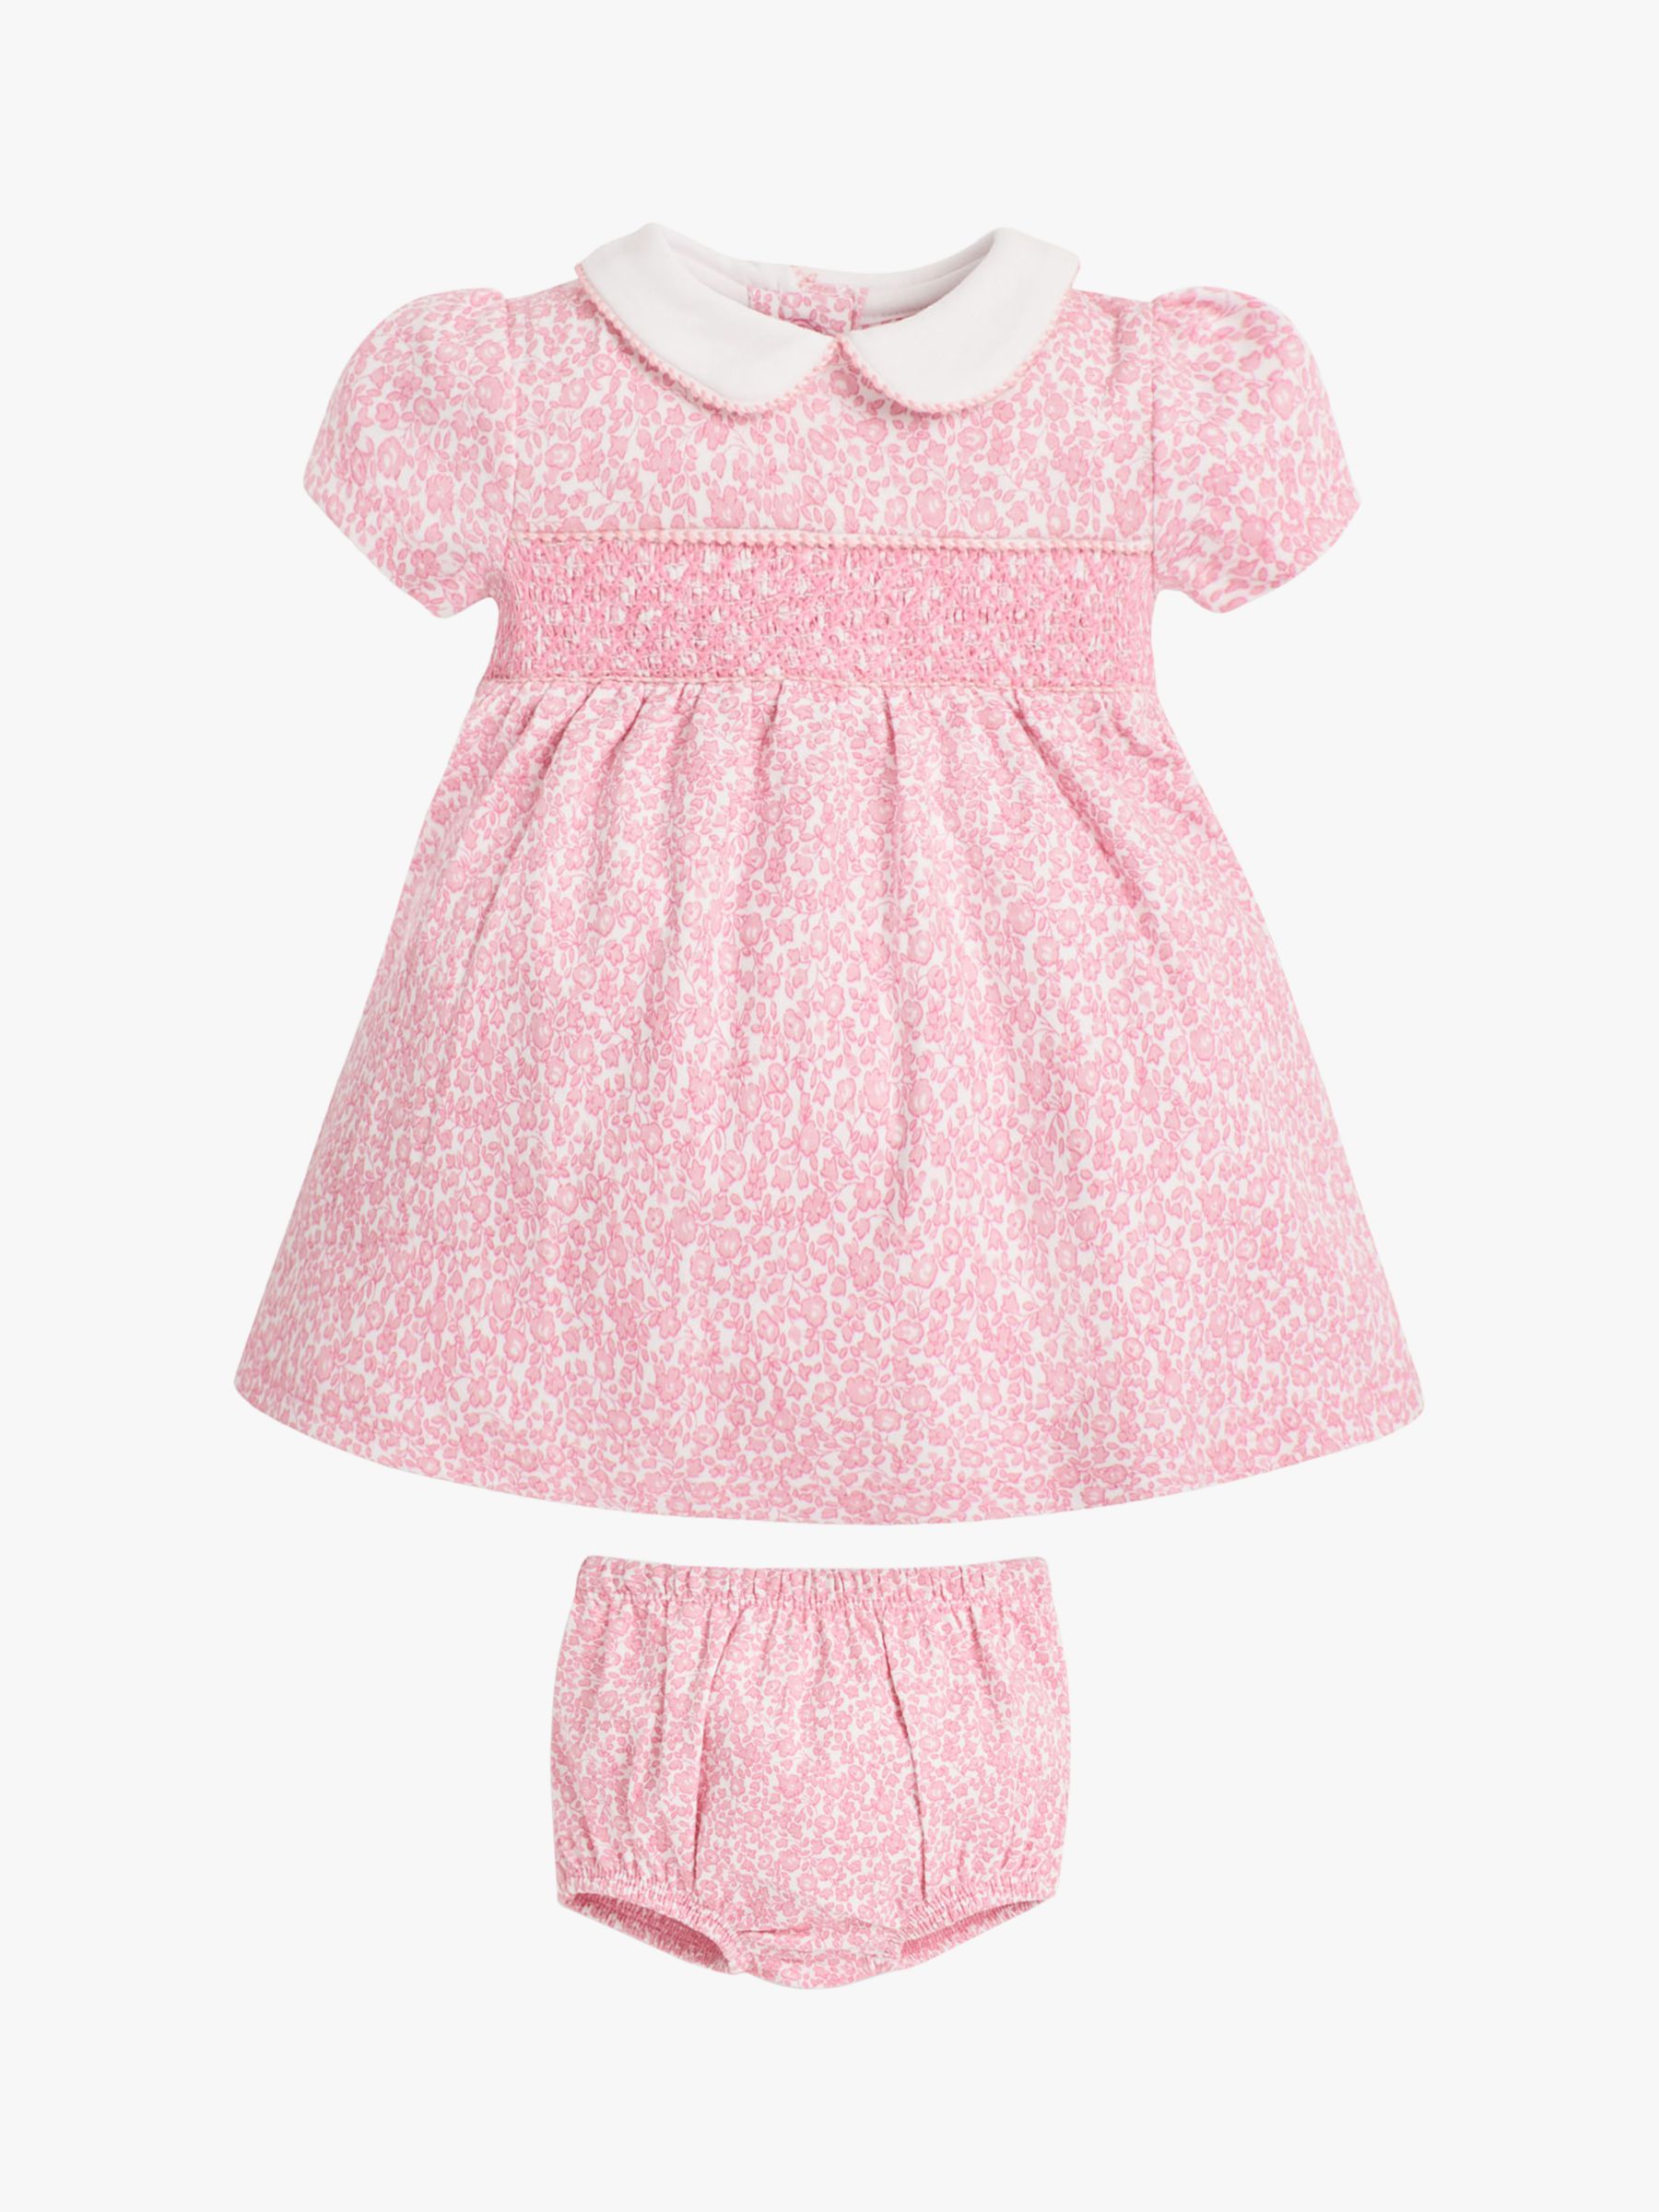 JoJo Maman Bébé Ditsy Smocked Dress and Knickers Set, Pink, 3-6 months